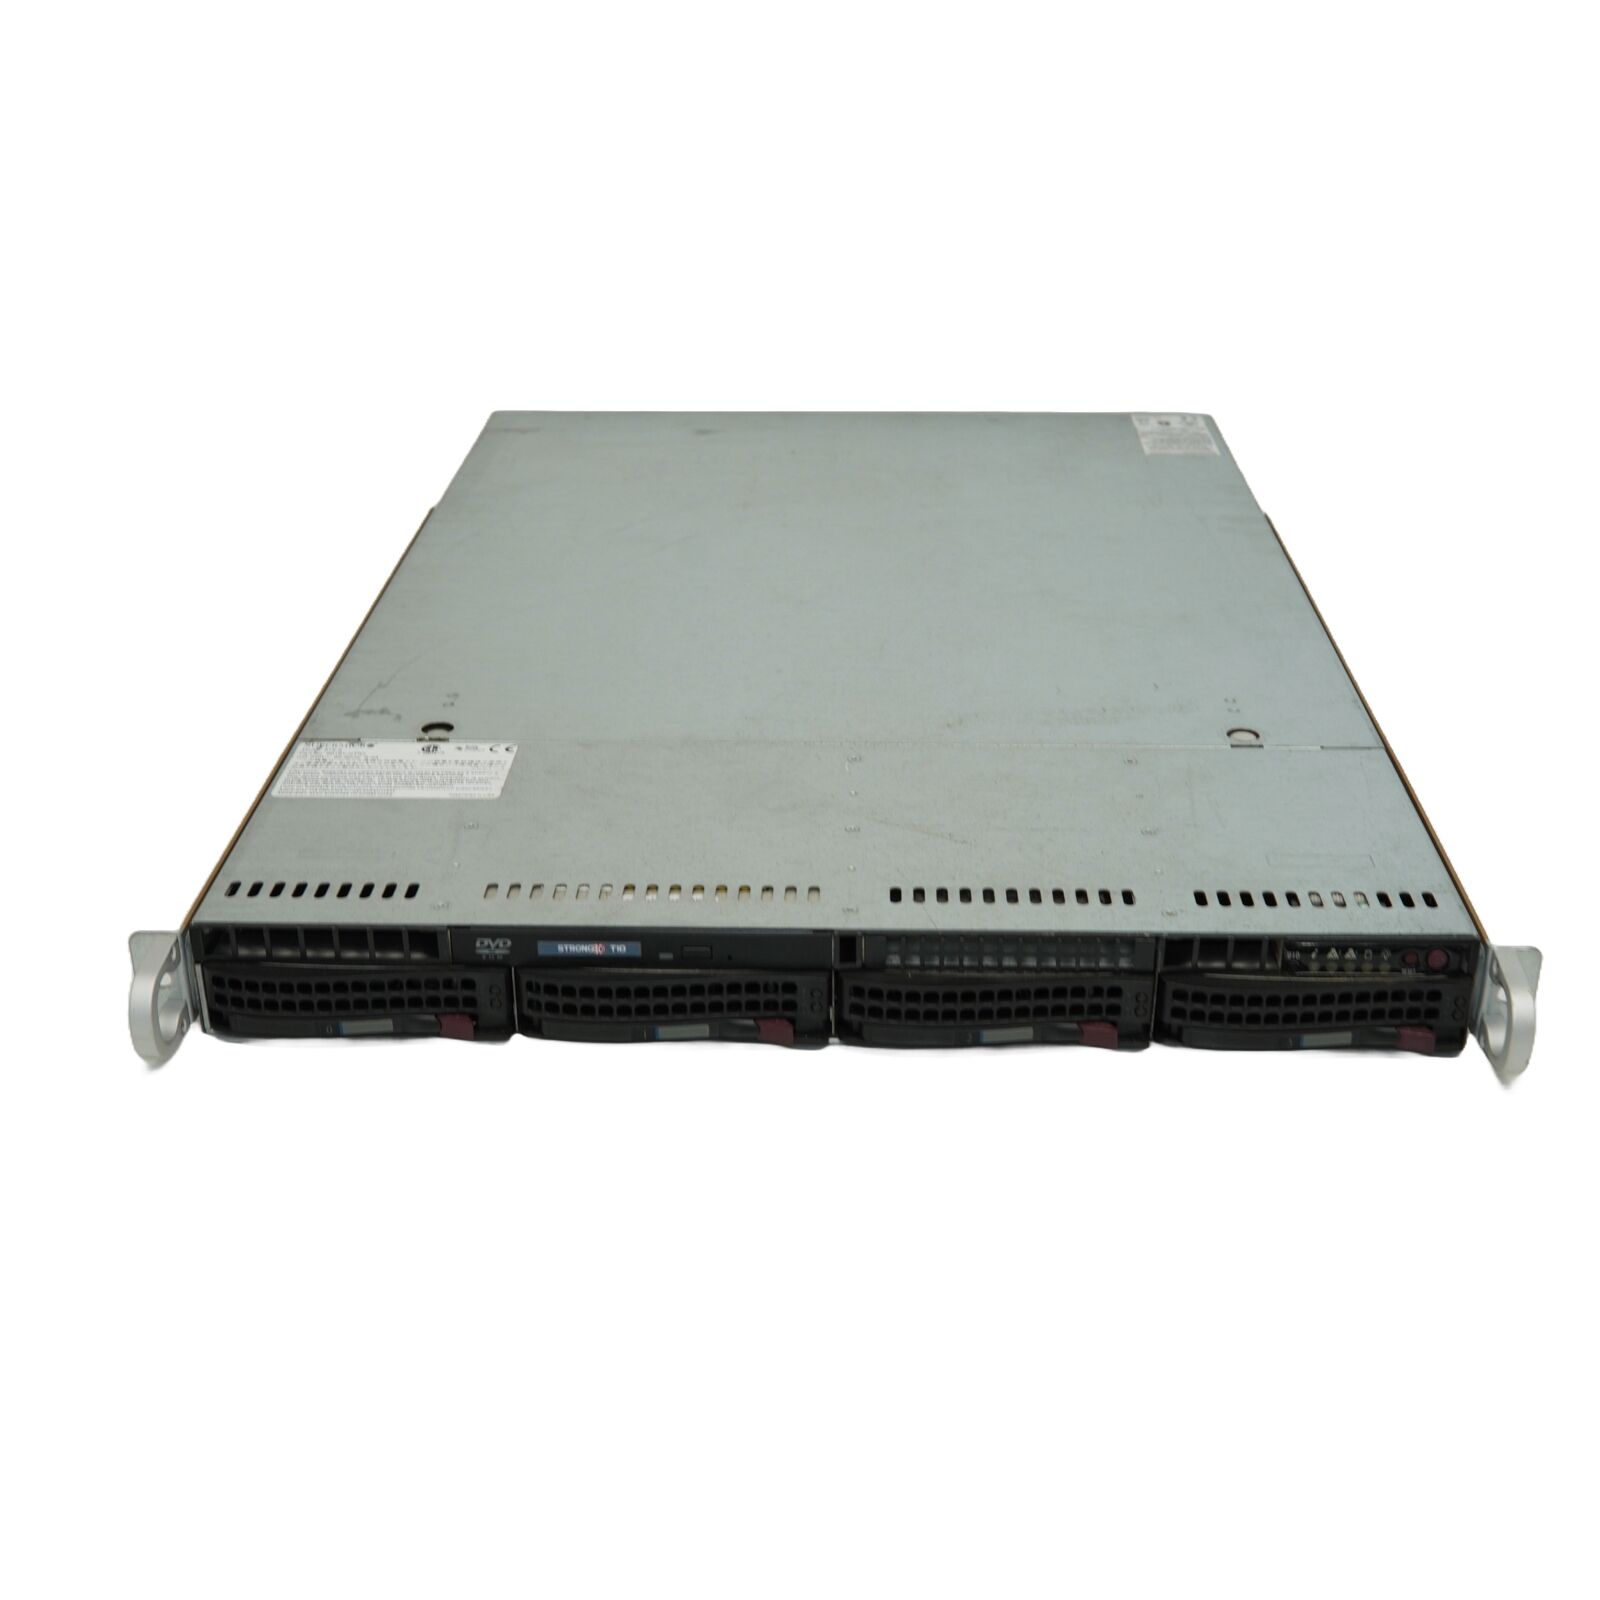 Supermicro 815-6 4-Bay Server